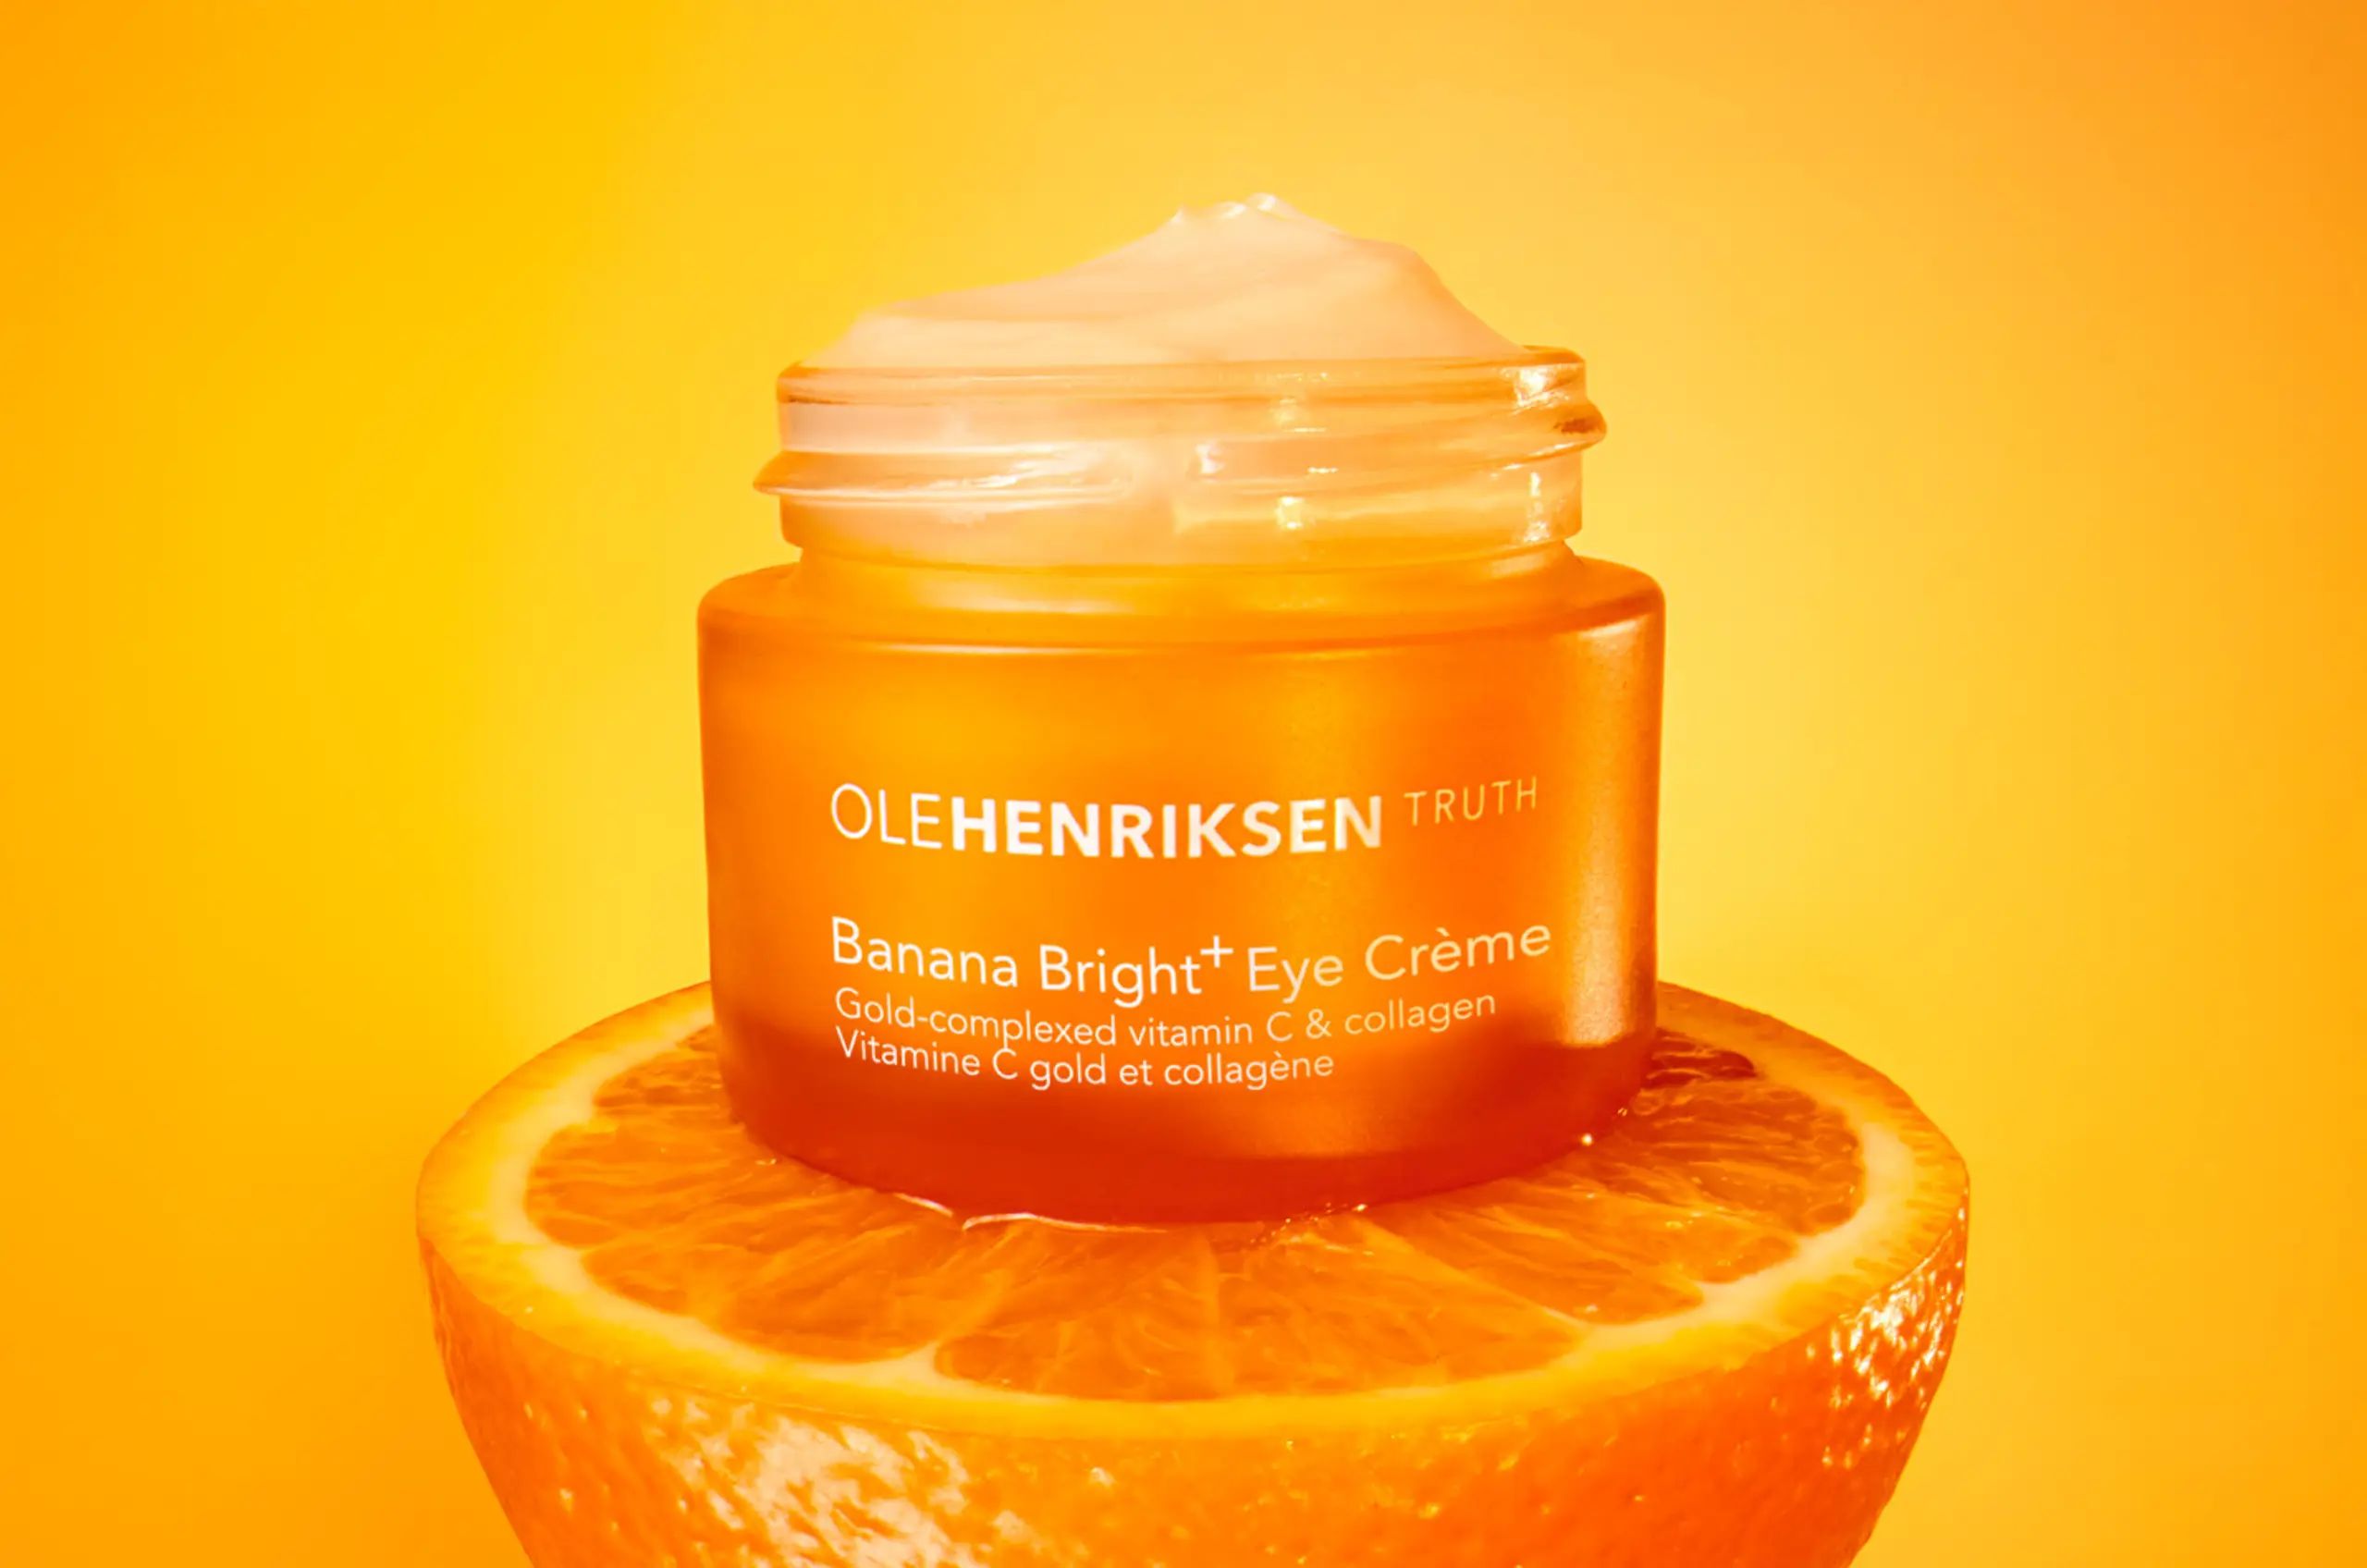 Banana Bright+ Eye Crème | Ole Henriksen